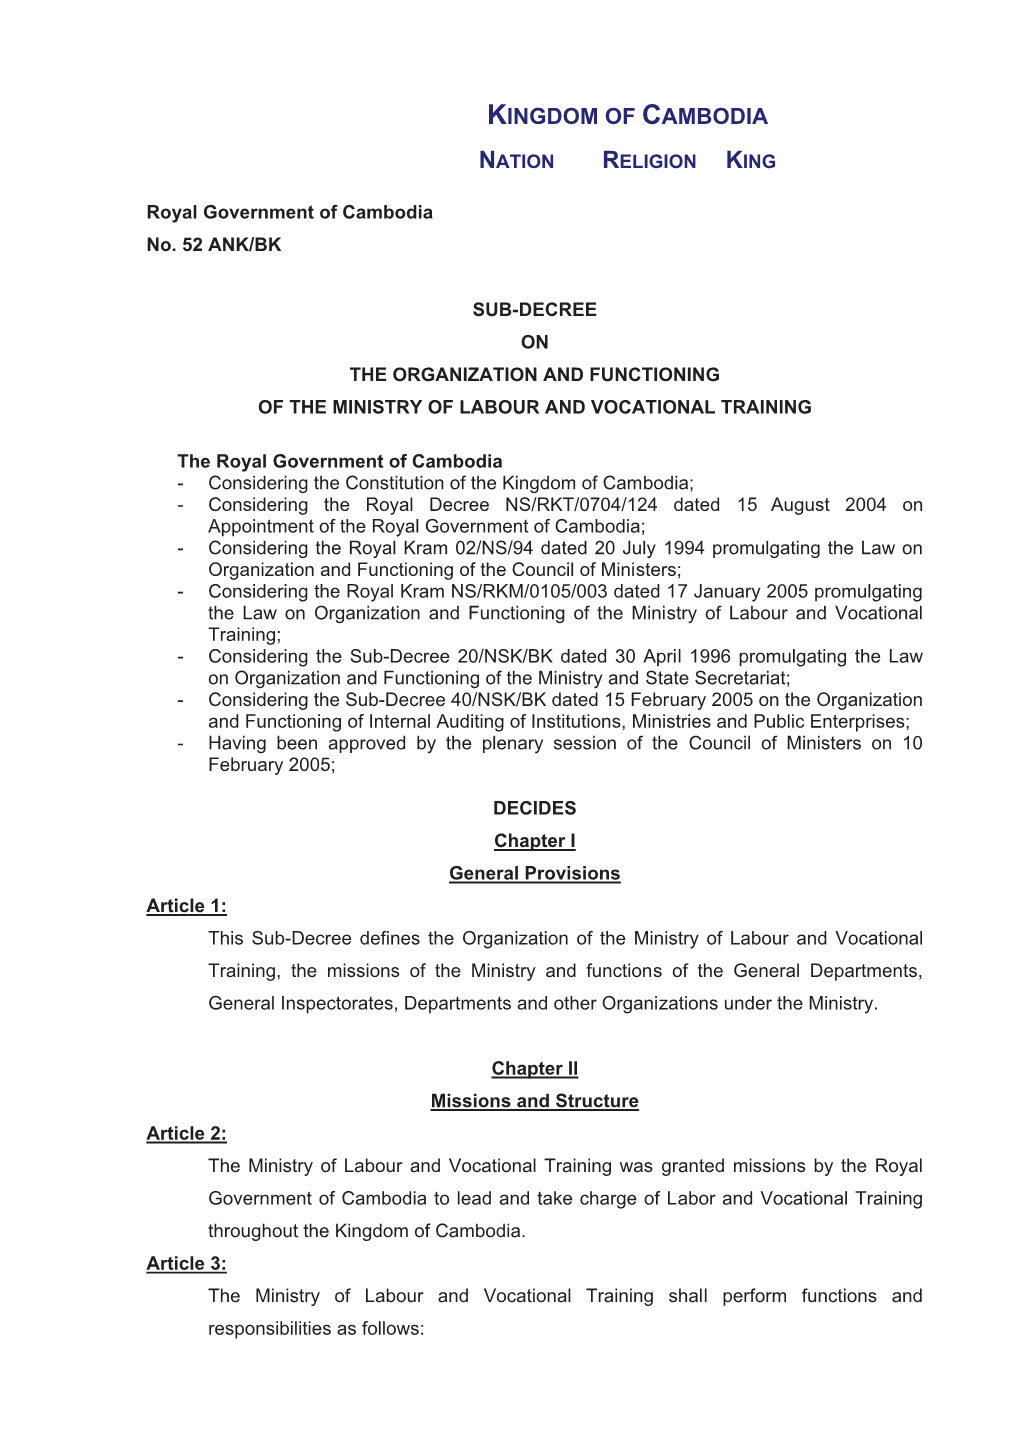 PDF of Sub-Decree in English